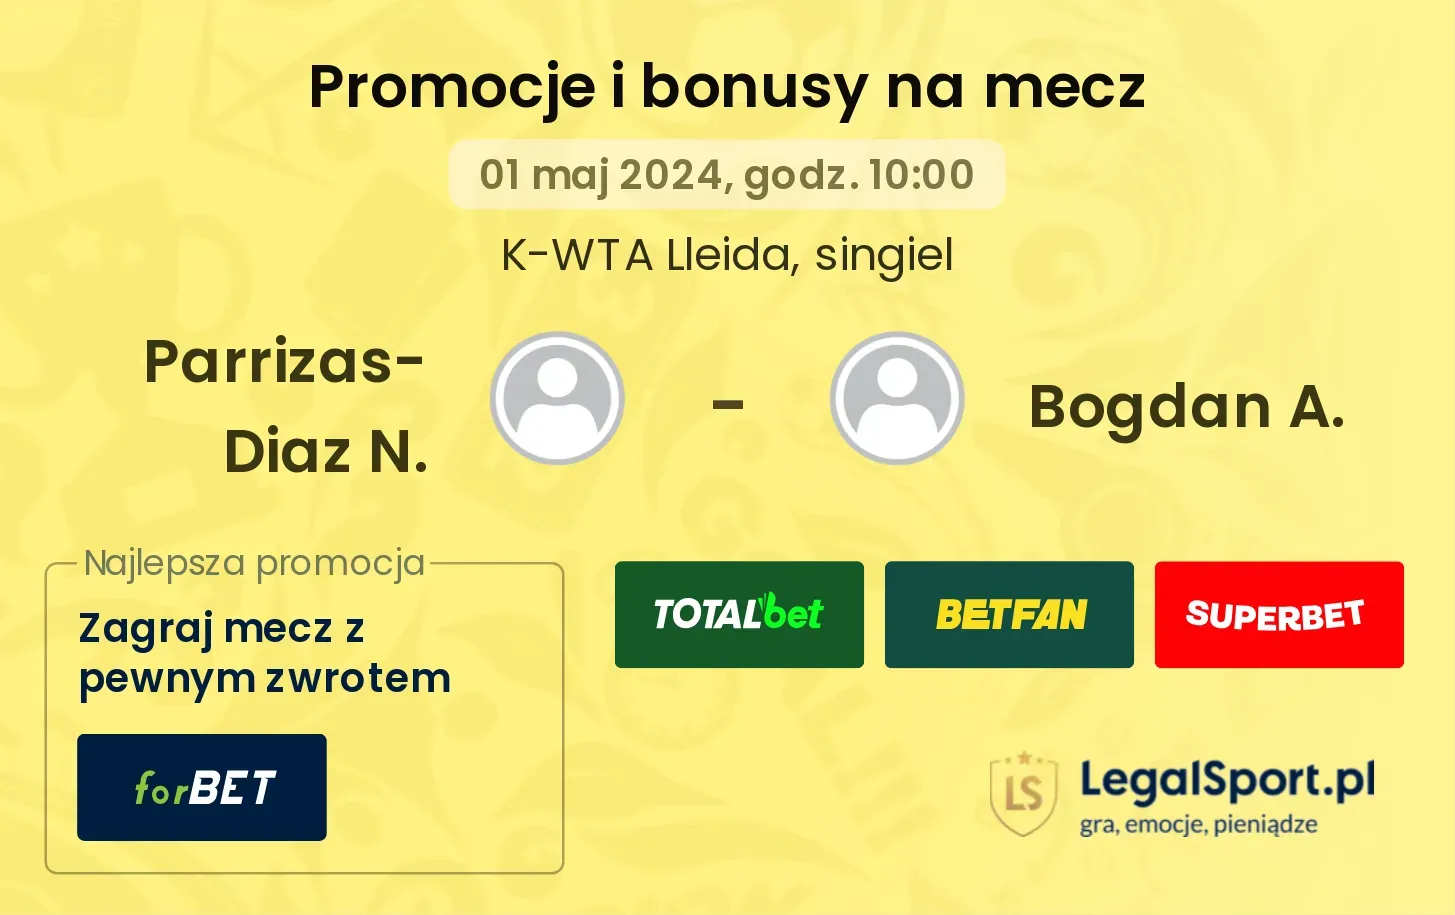 Parrizas-Diaz N. - Bogdan A. promocje bonusy na mecz